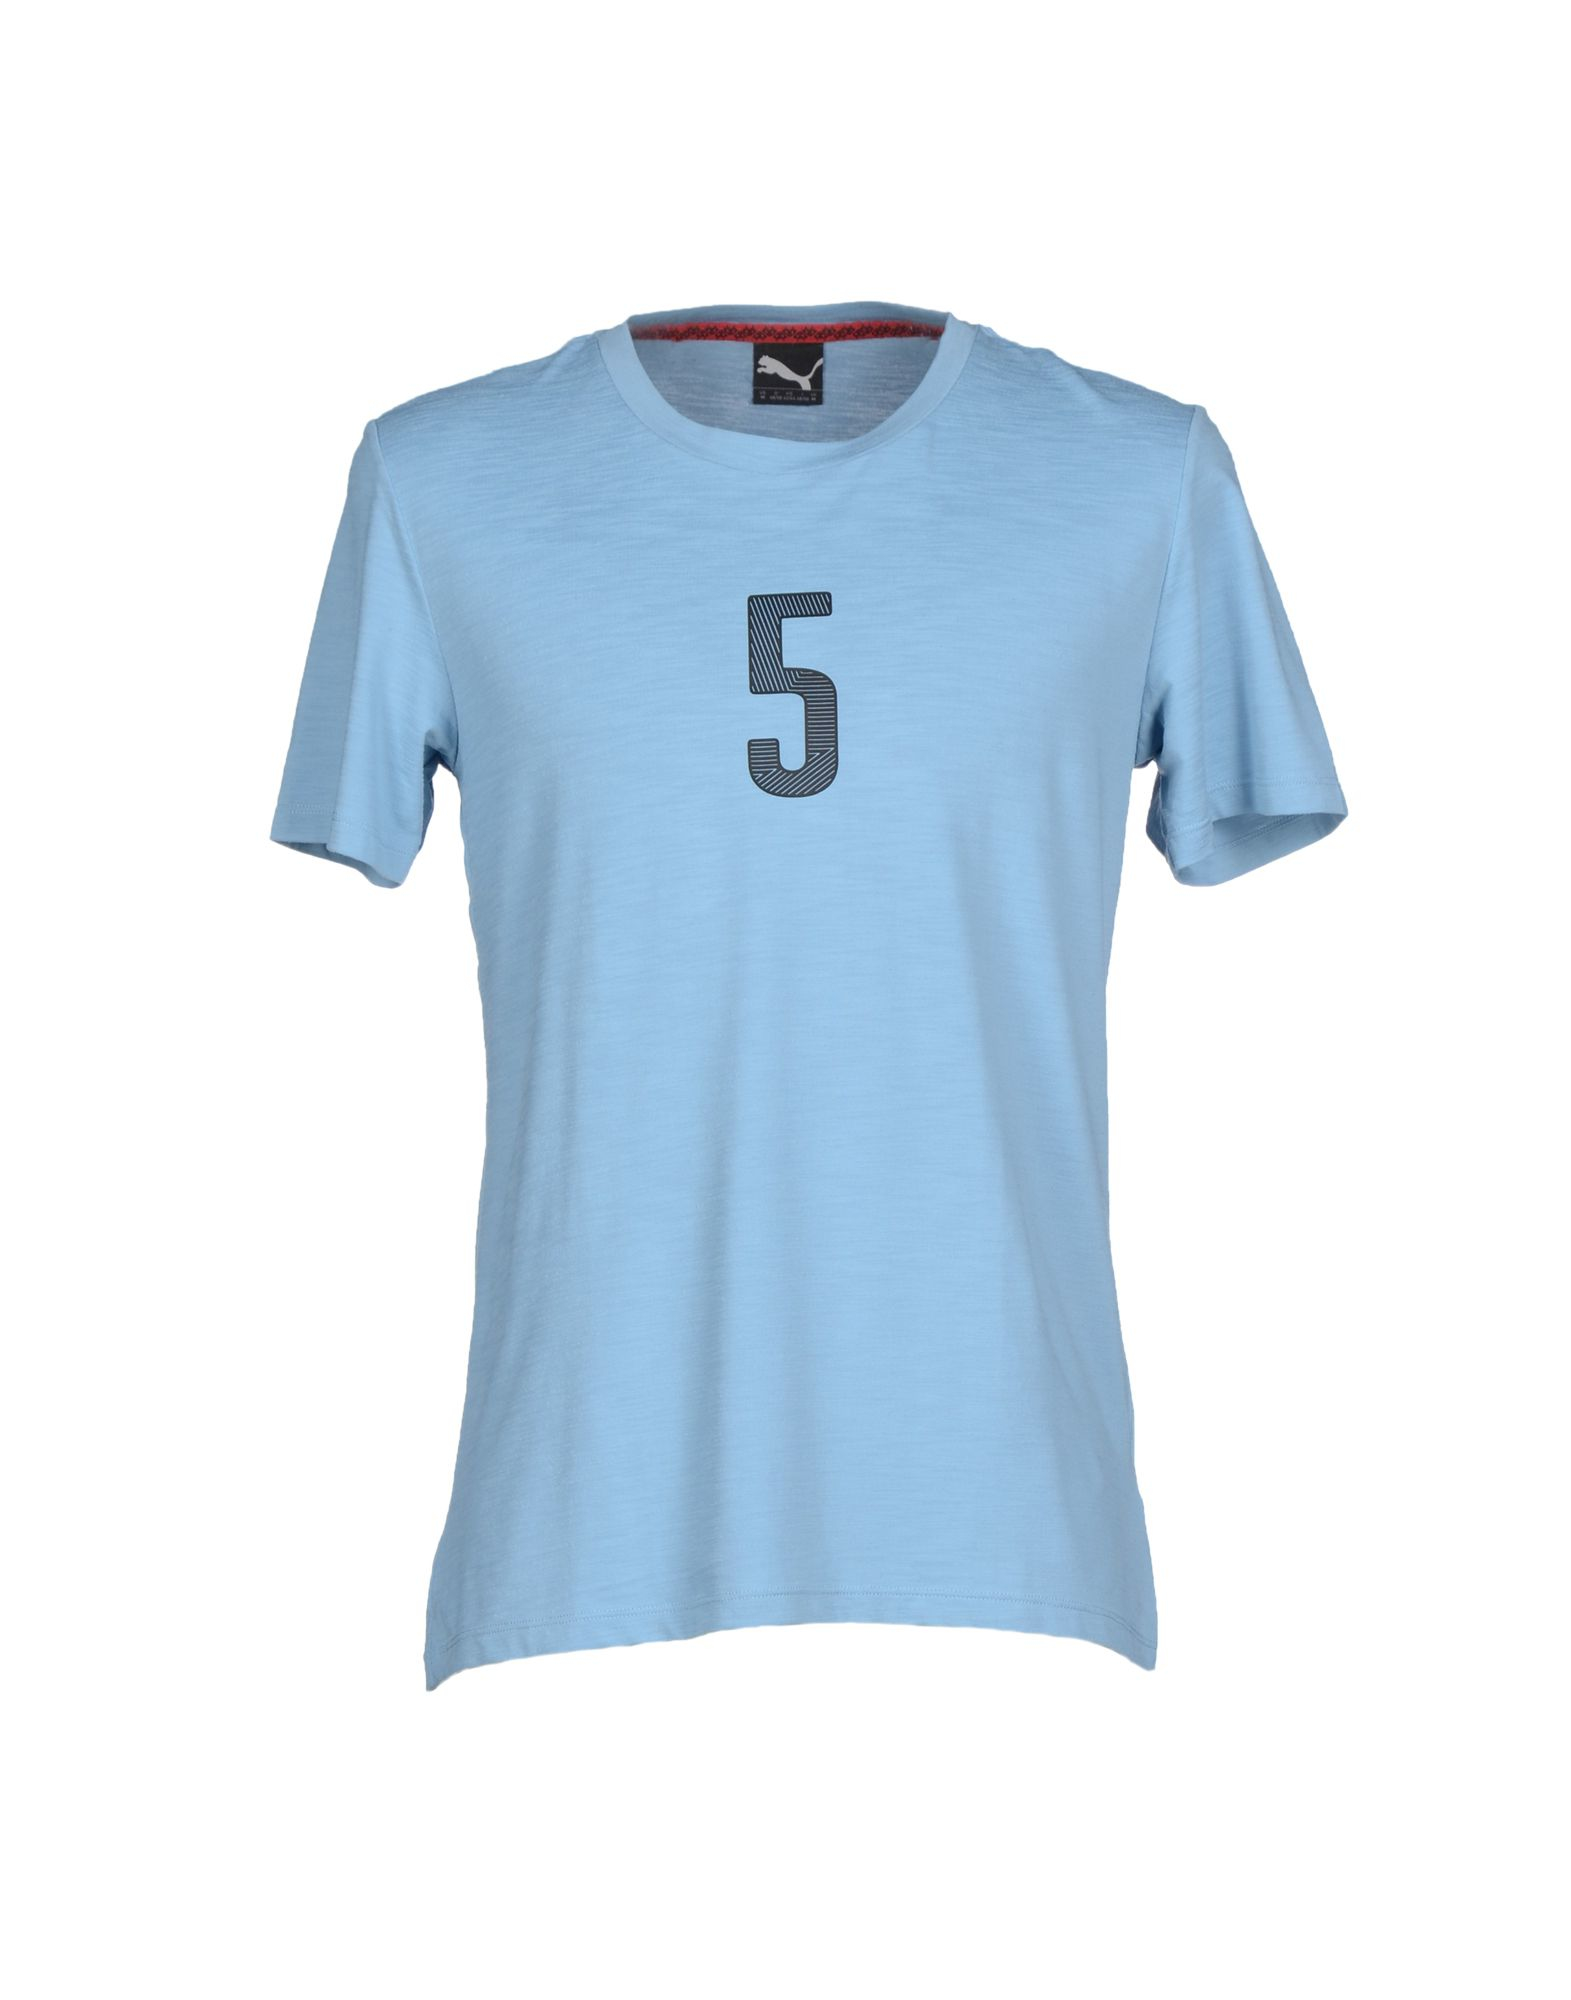 Lyst - Puma T-shirt in Blue for Men